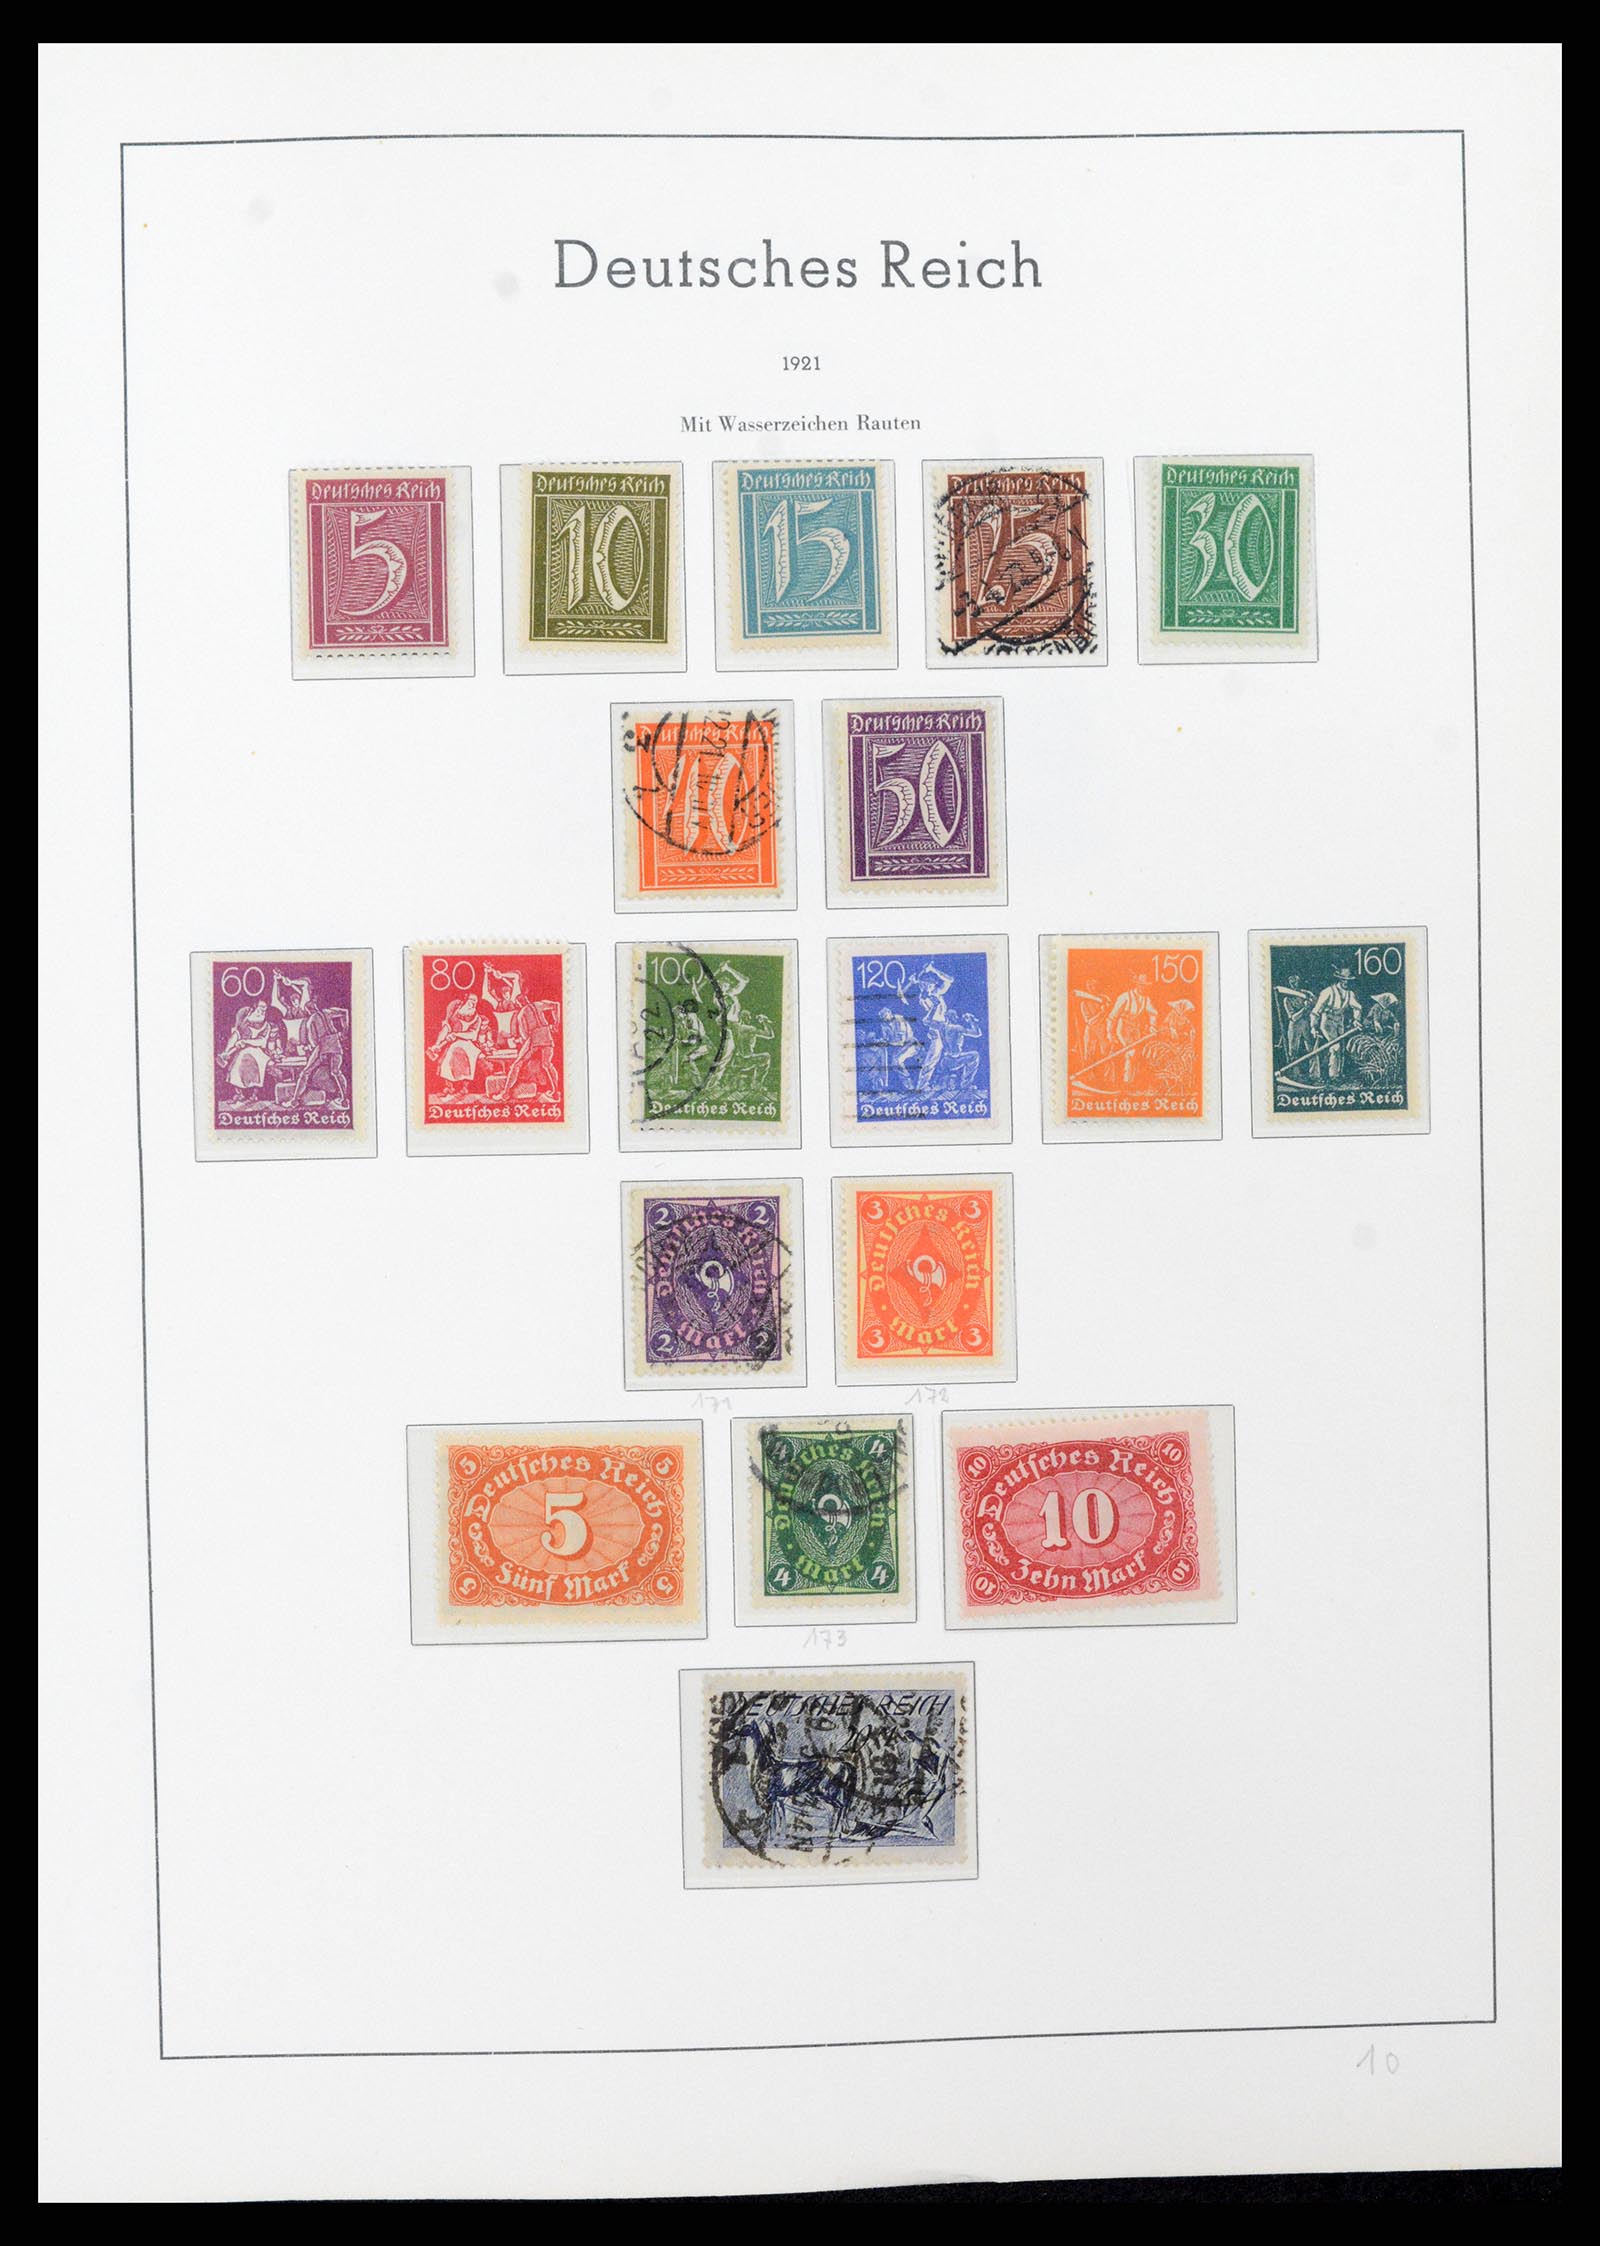 37589 015 - Stamp collection 37589 German Reich 1872-1945.